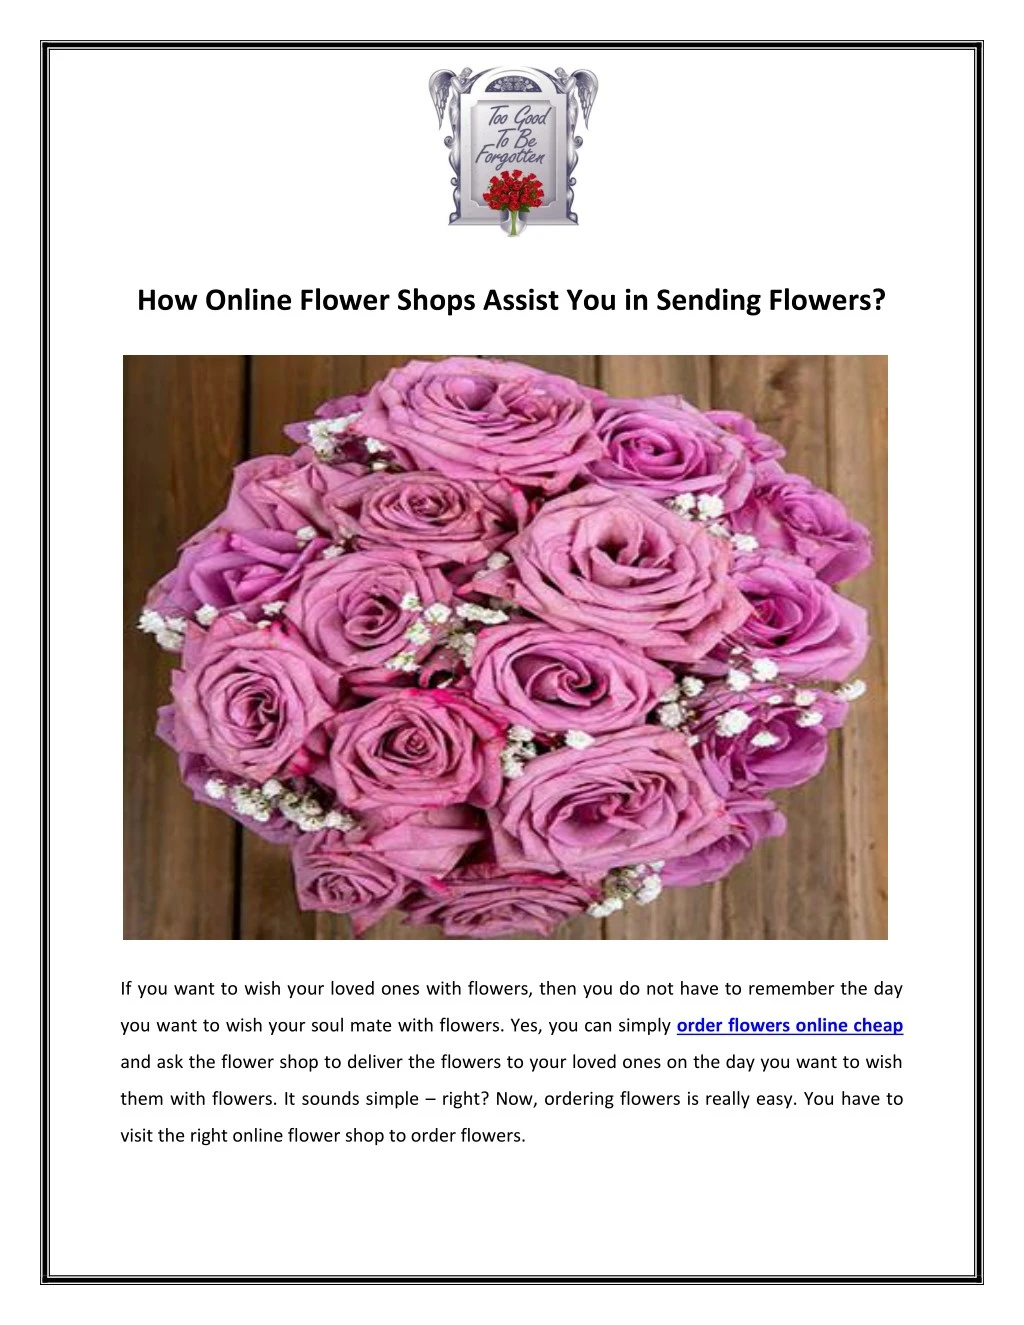 how online flower shops assist you in sending